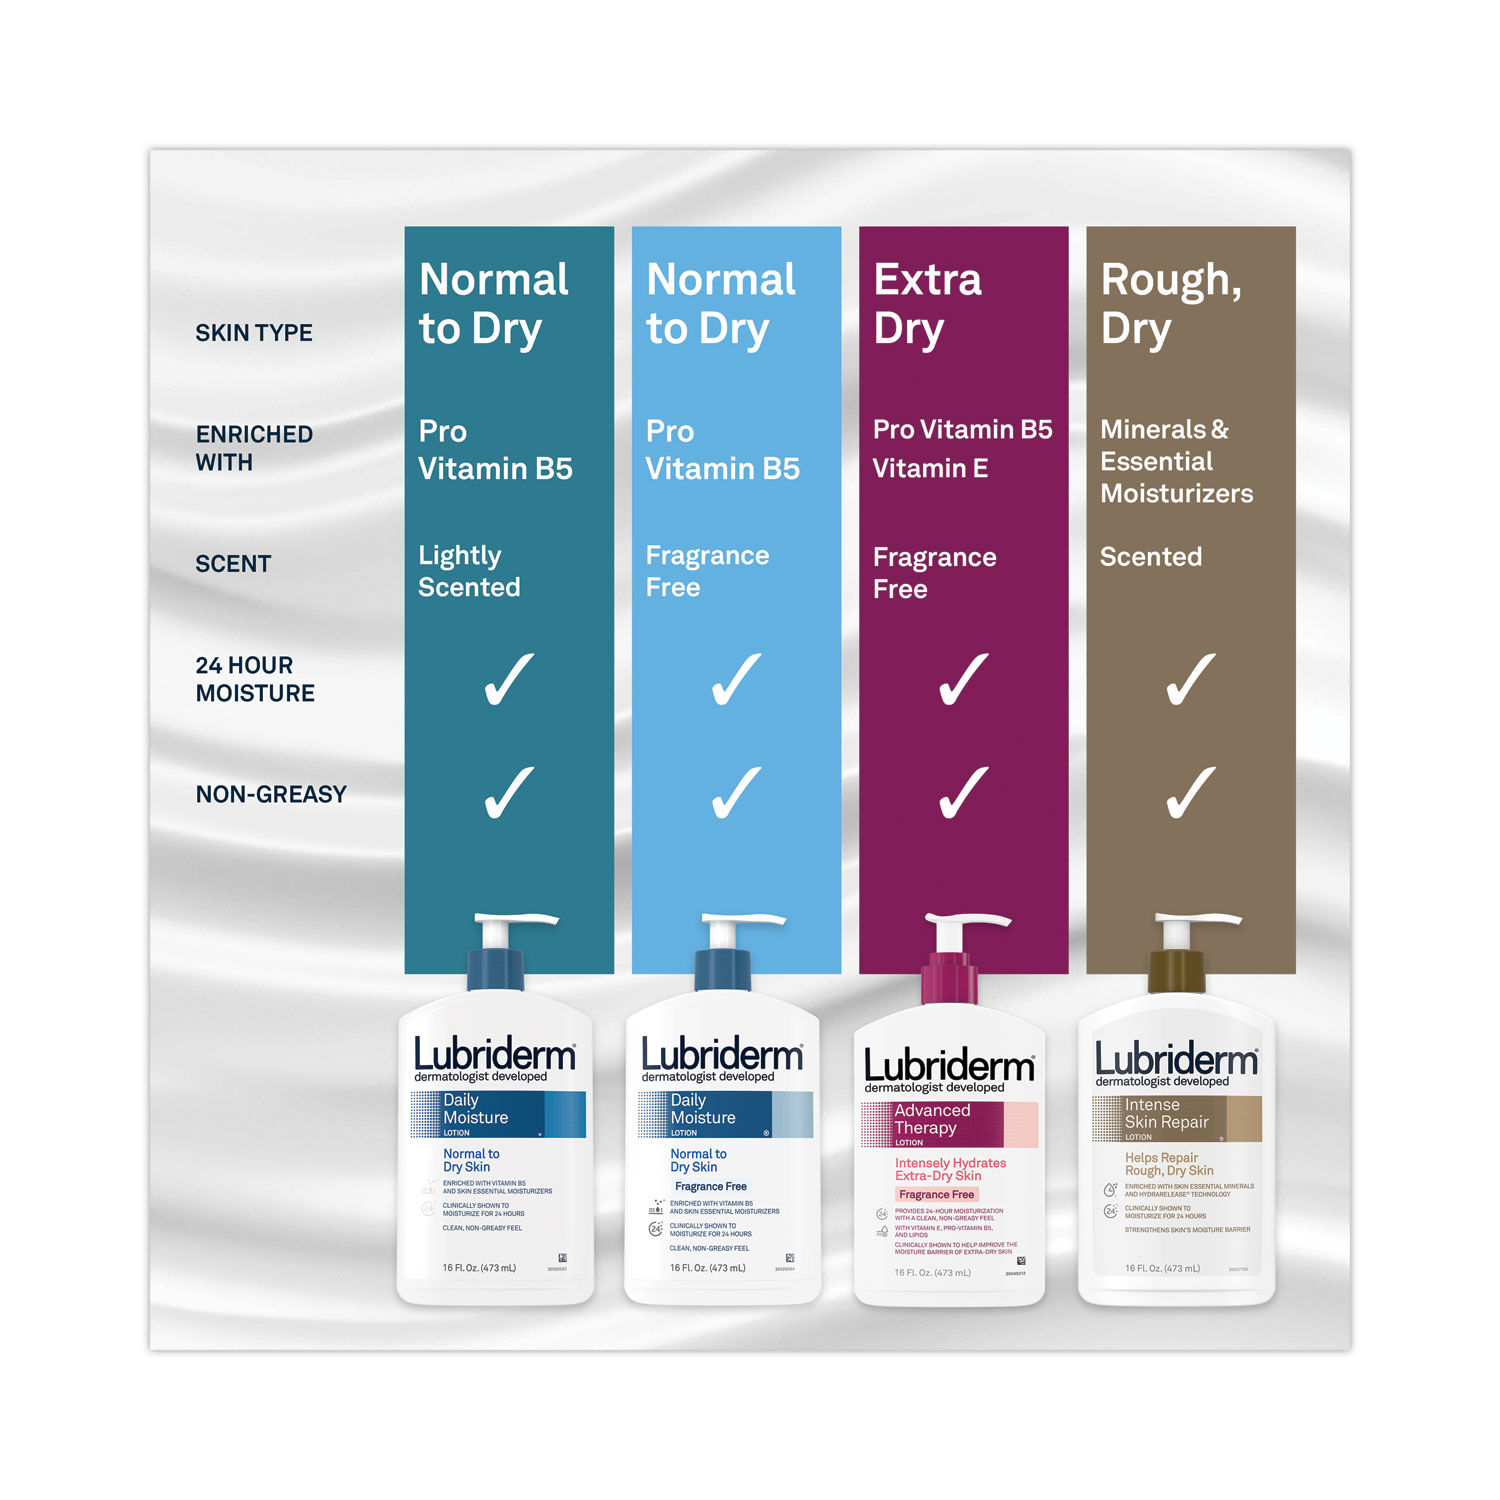 Aquatech Skin Care Premium w Optiphen Body Lotion for All Skin